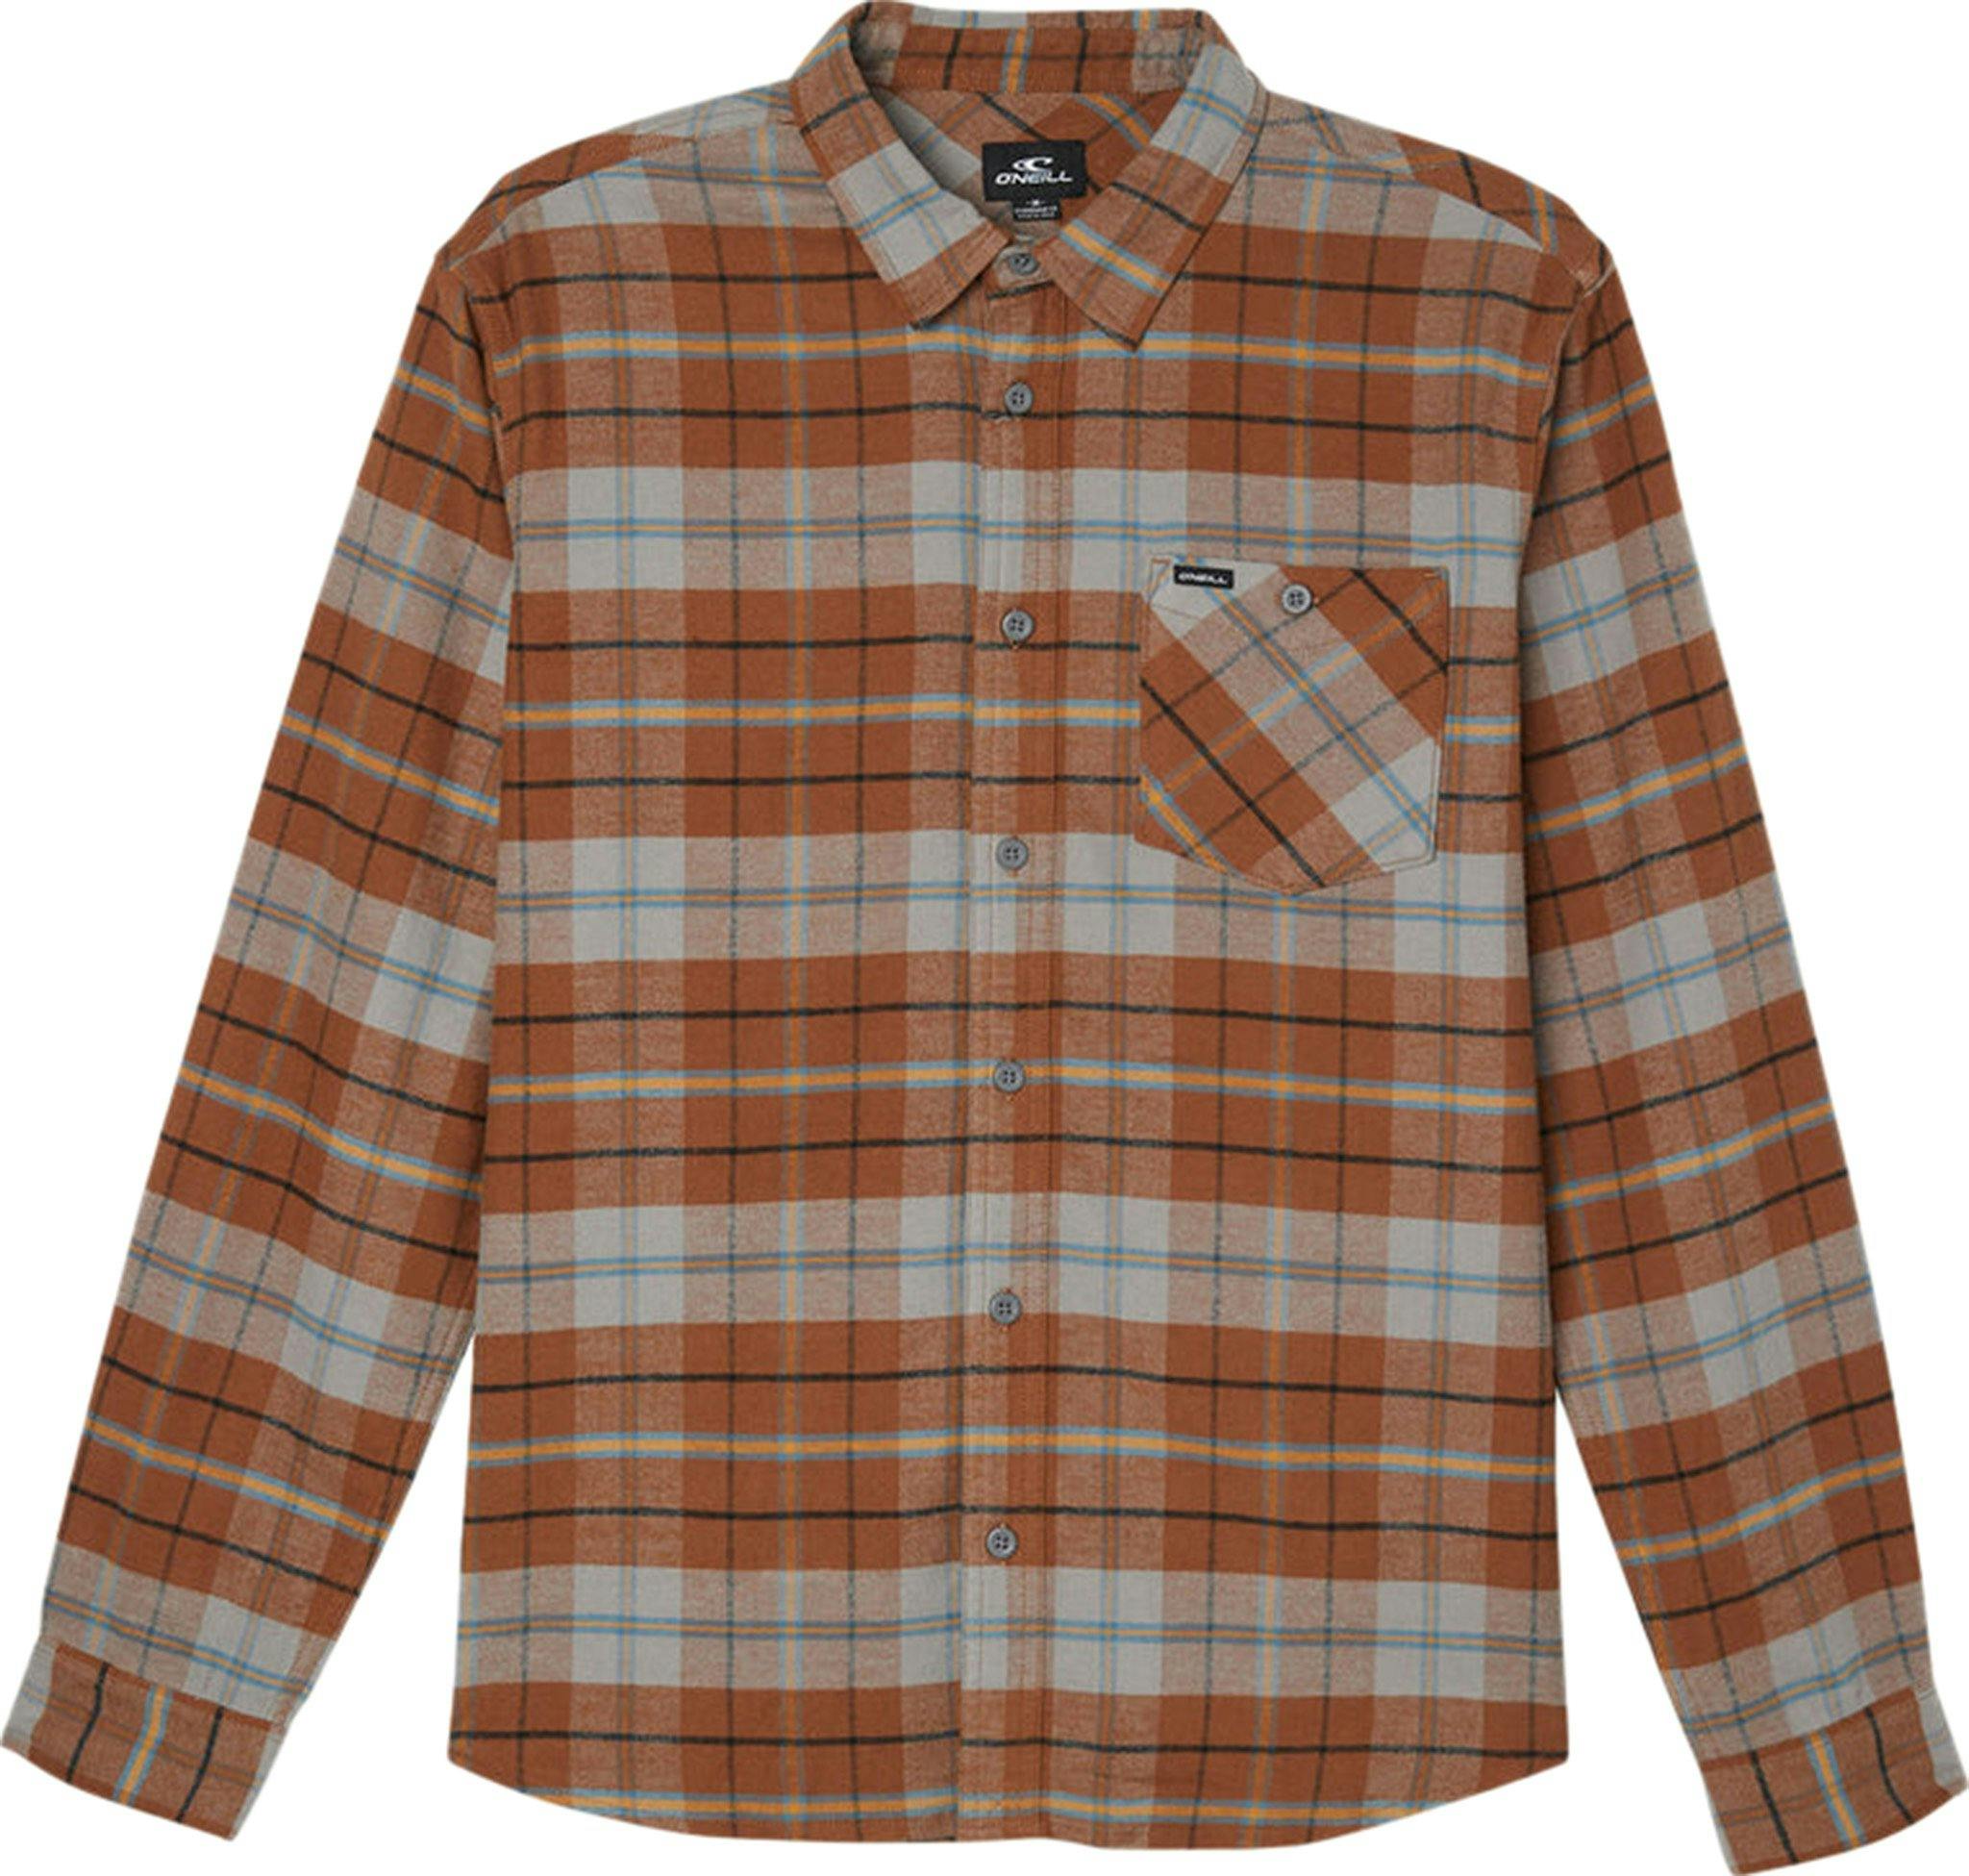 Product image for Redmond Plaid Stretch Flannel Shirt - Men's